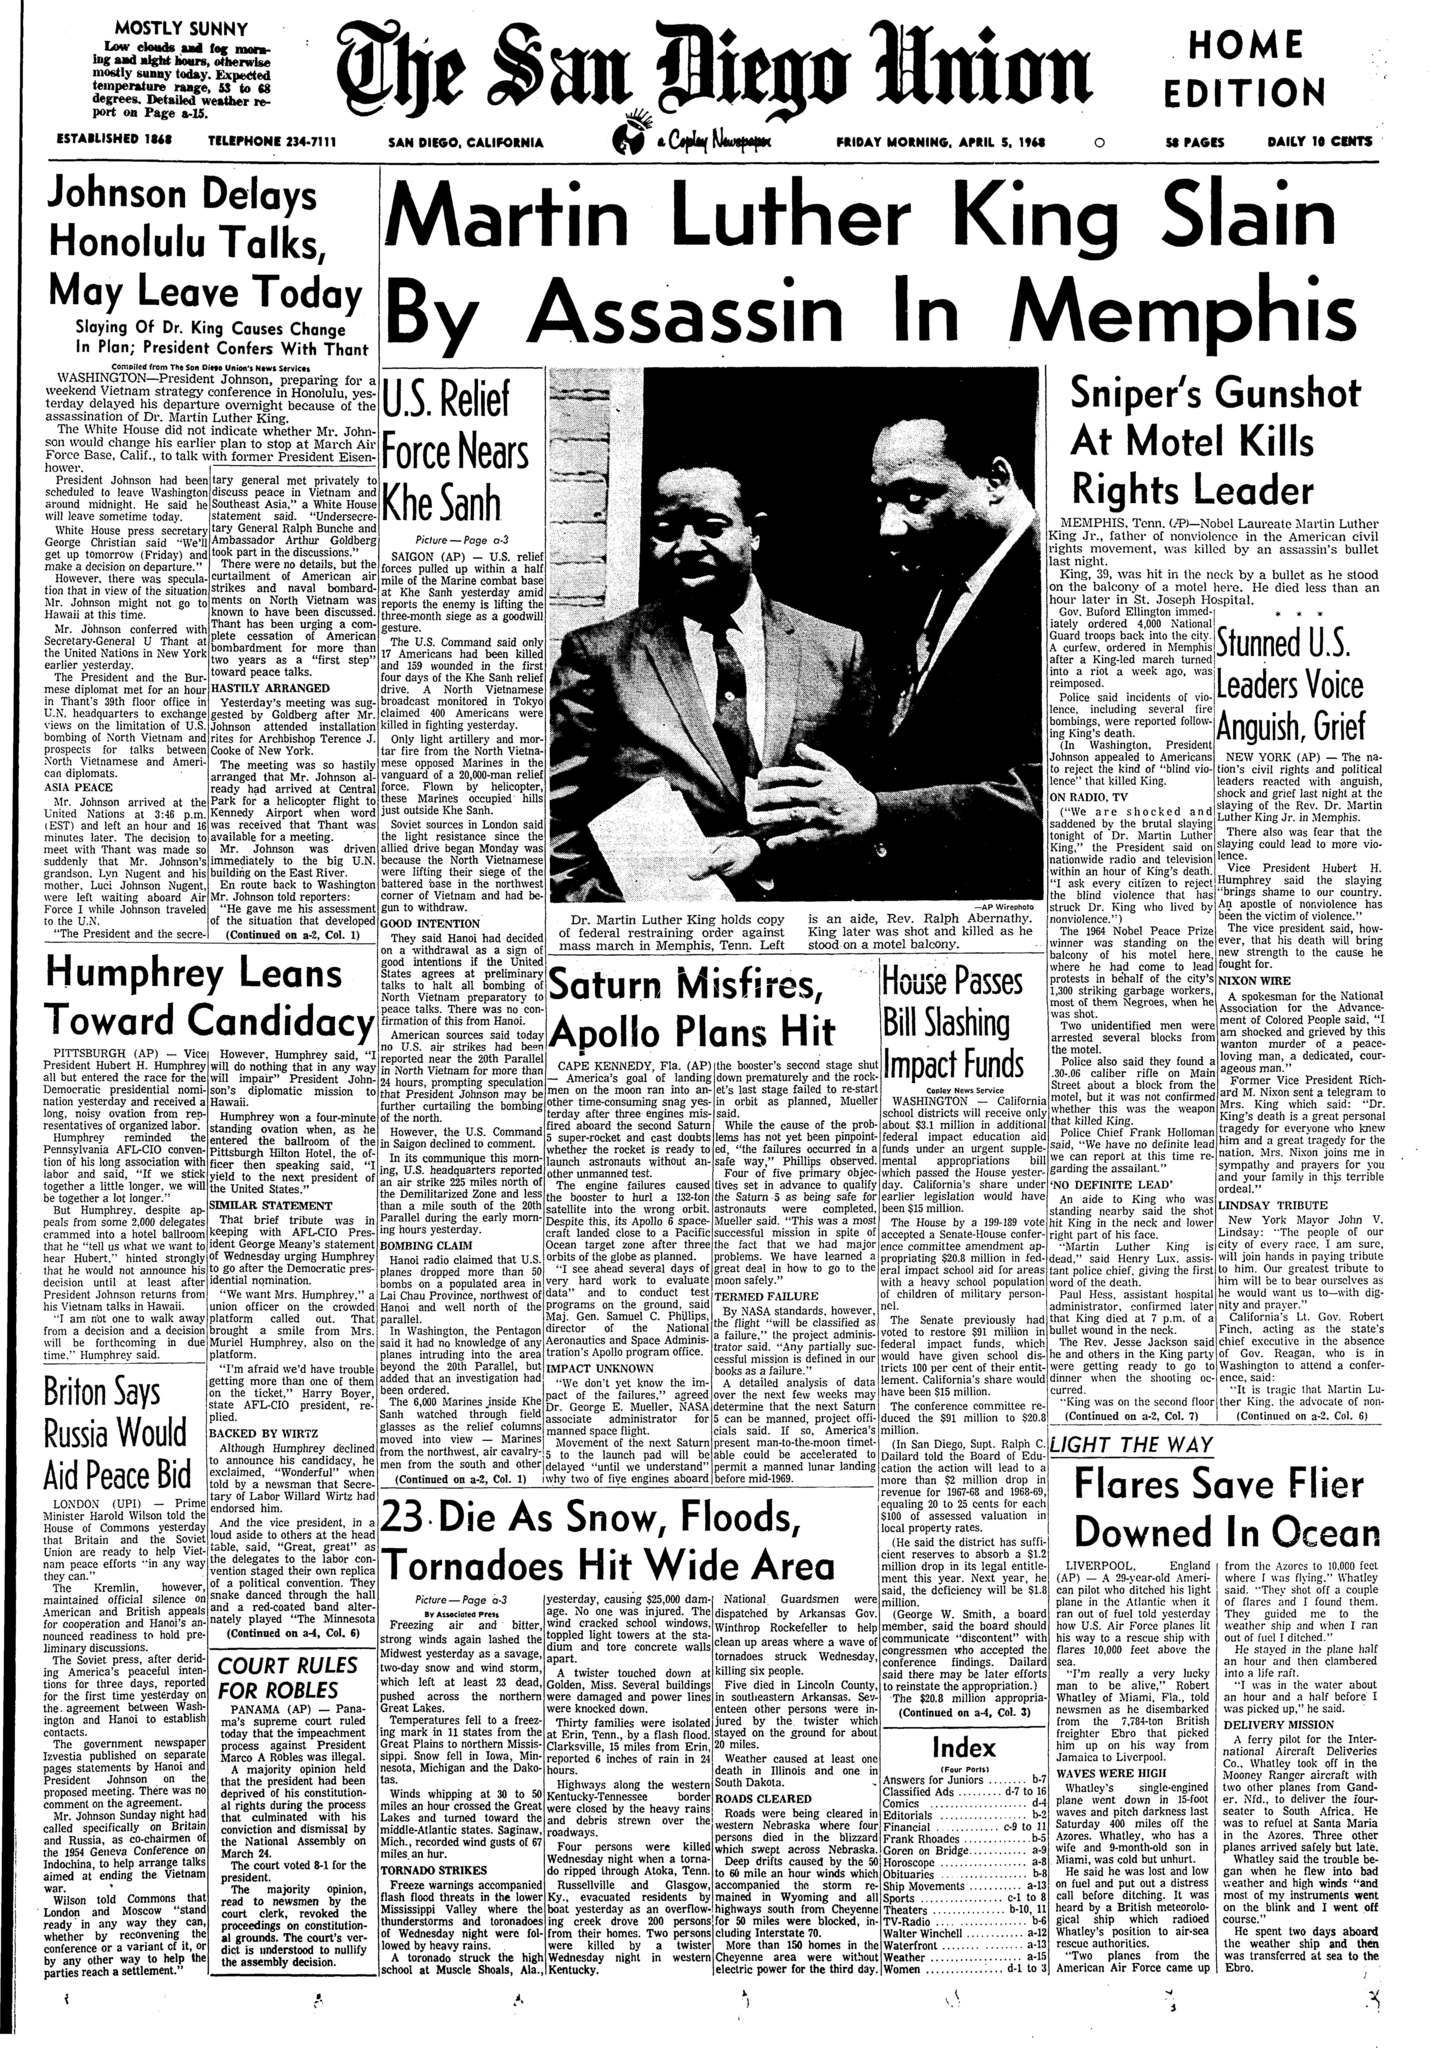 April 5, 1958